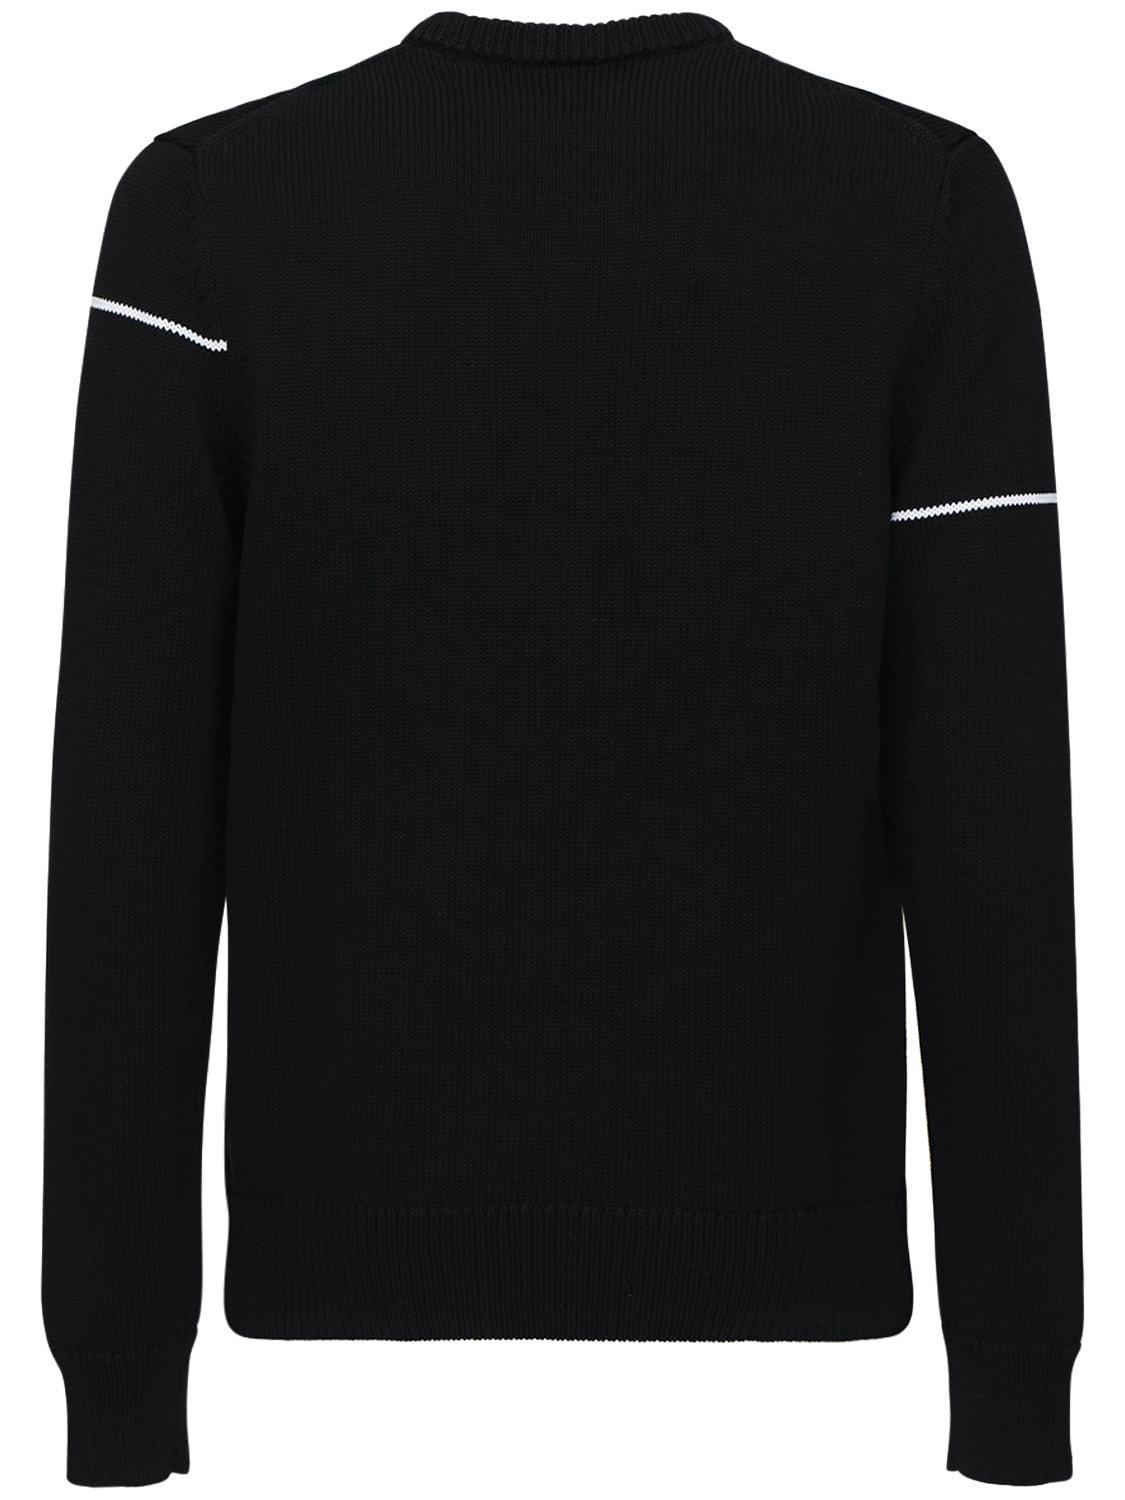 Givenchy Cotton Split Logo Crew Knit in Black for Men - Lyst